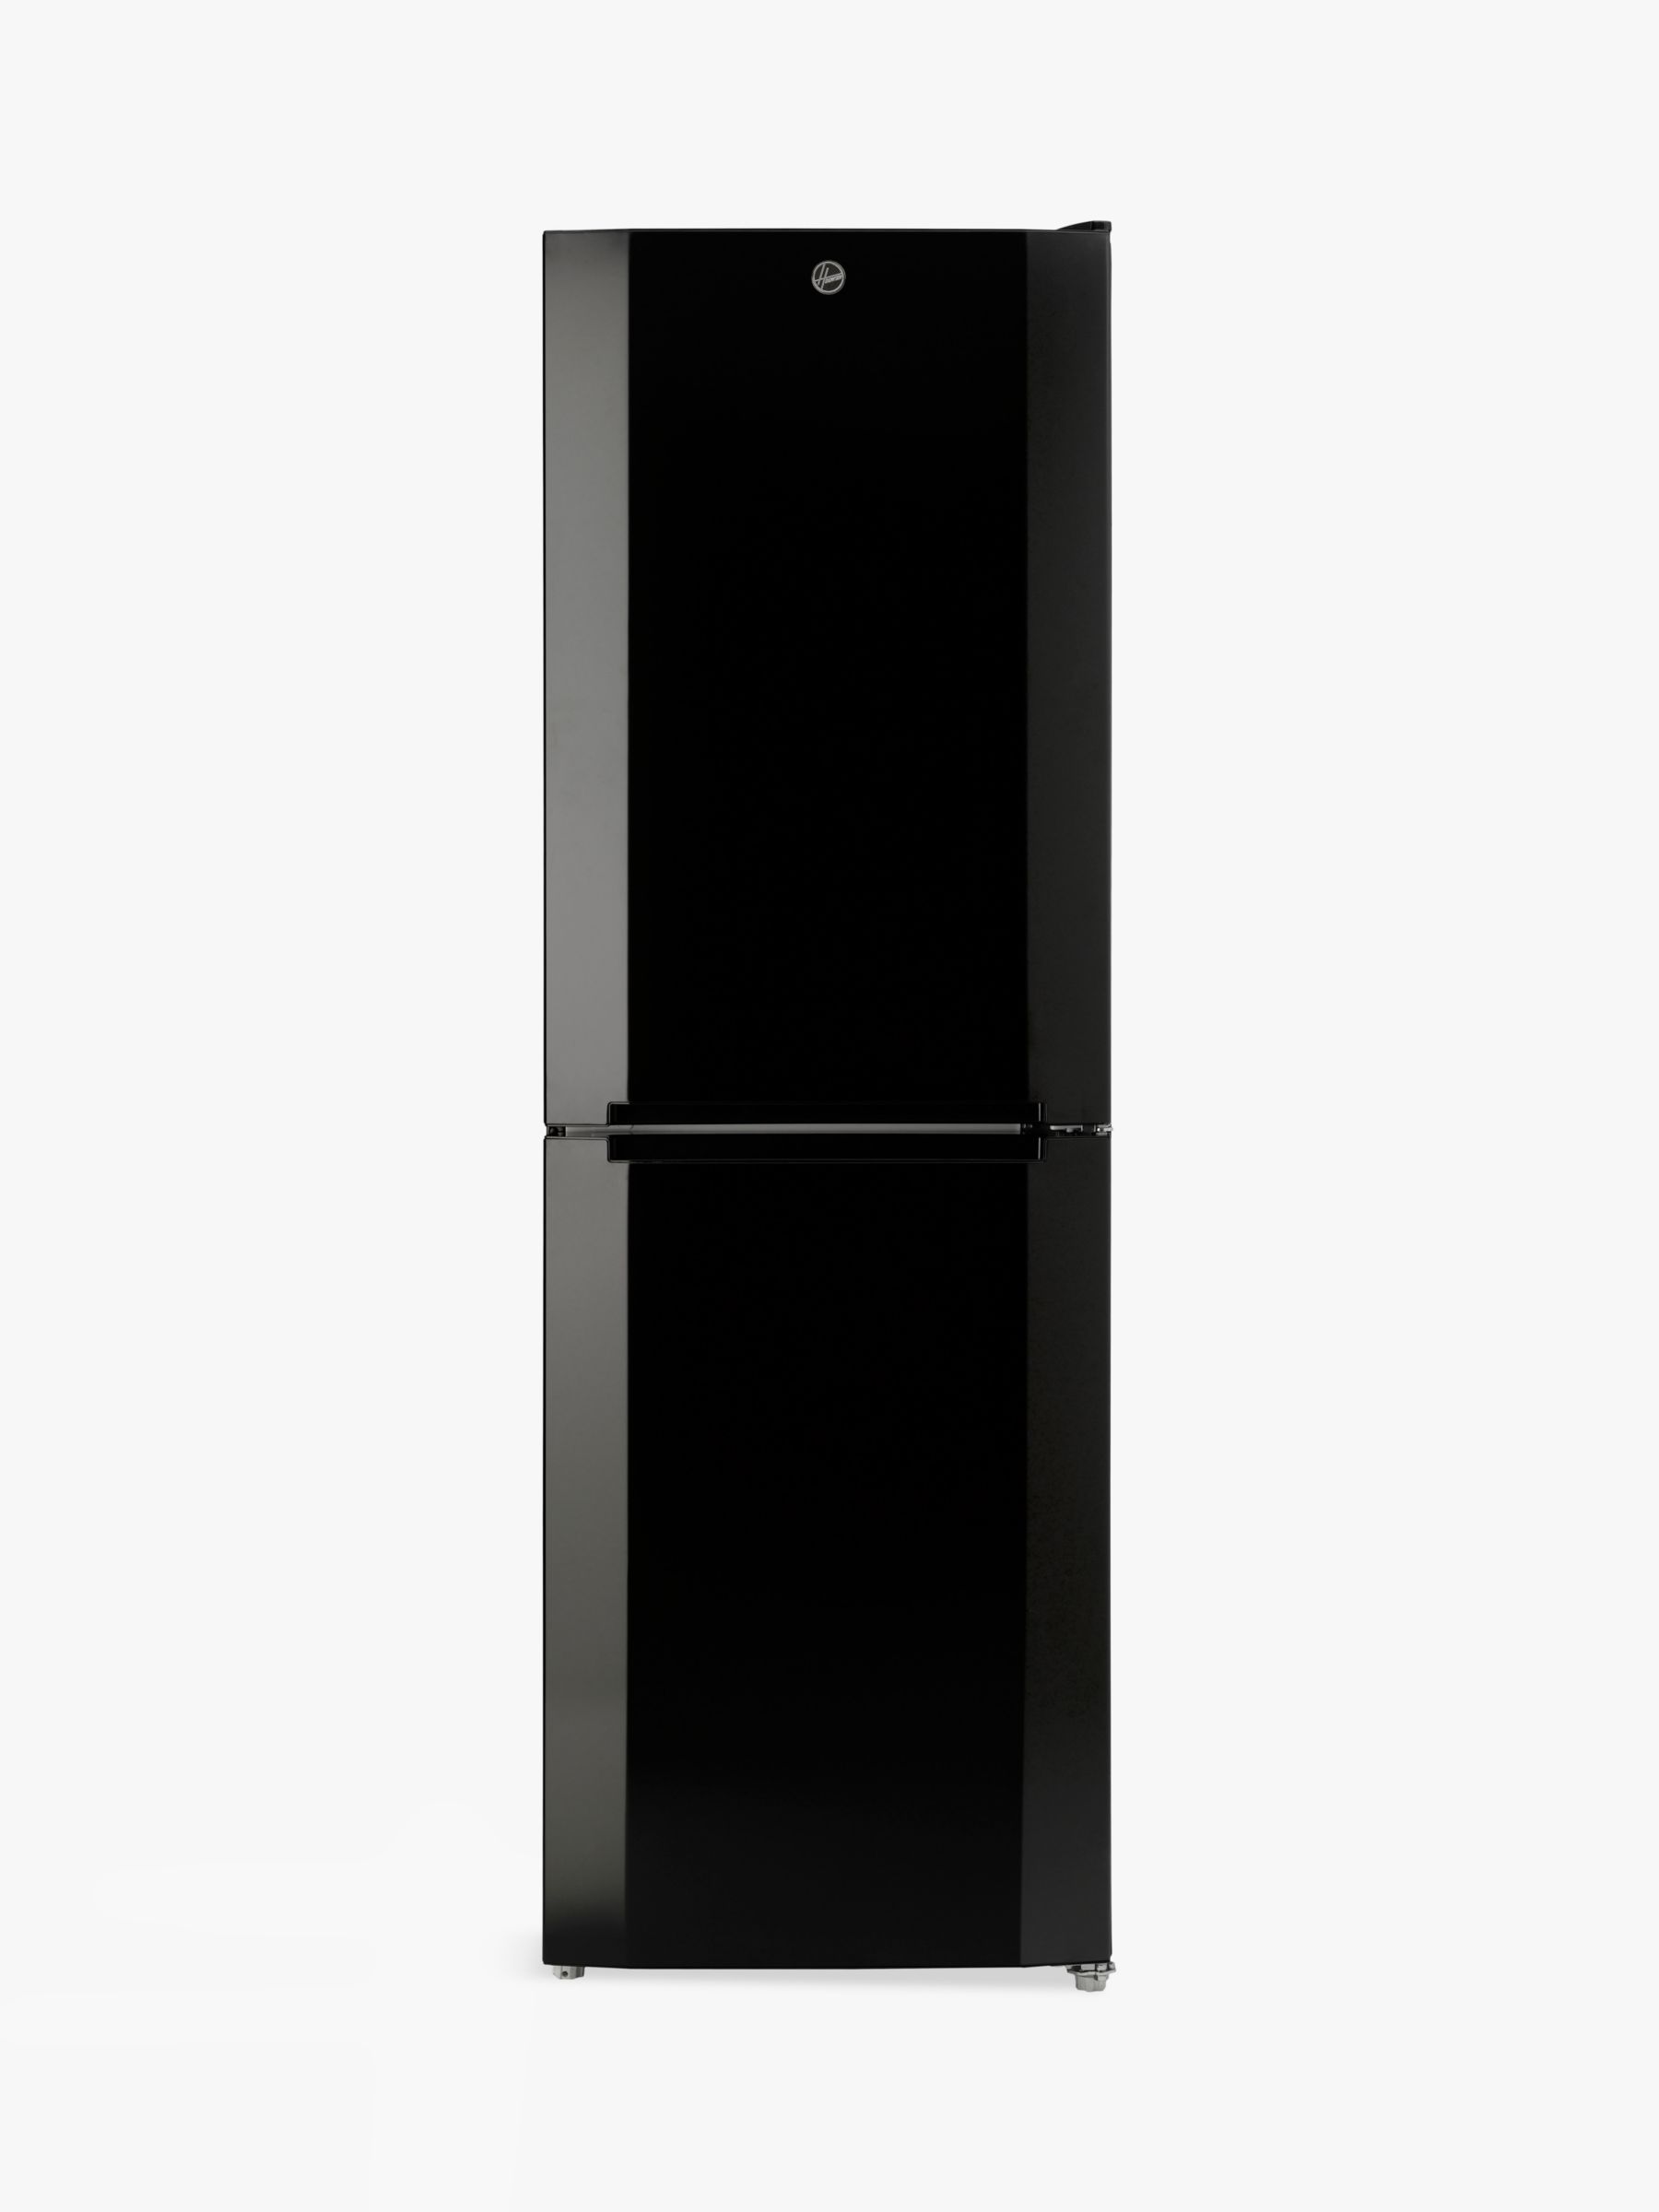 Hoover HMNB6182BK Freestanding Fridge Freezer, A+ Energy Rating, 60cm Wide, Black